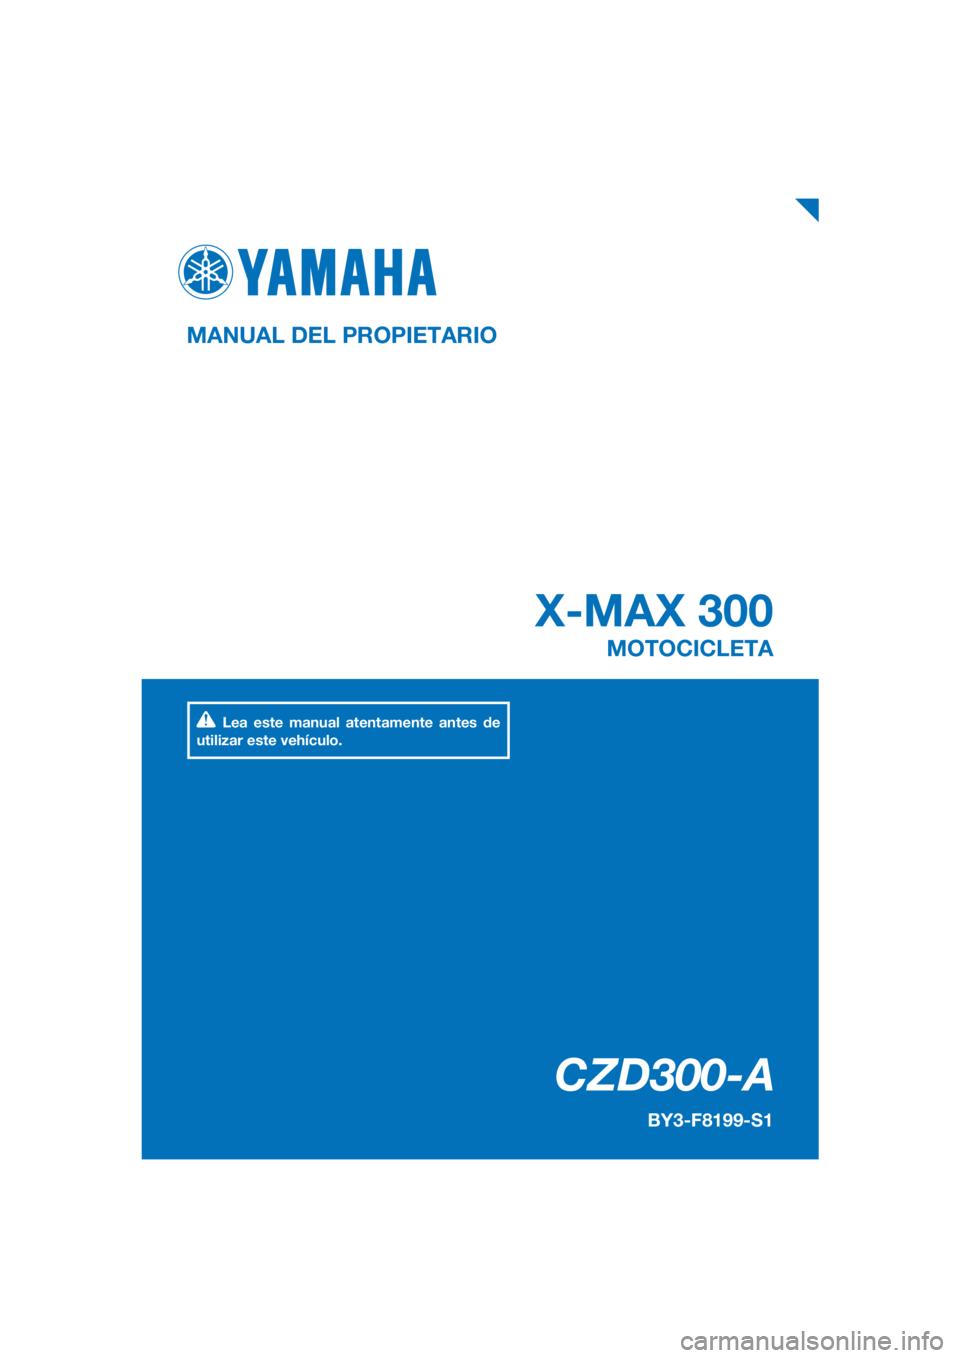 YAMAHA XMAX 300 2018  Manuale de Empleo (in Spanish) 